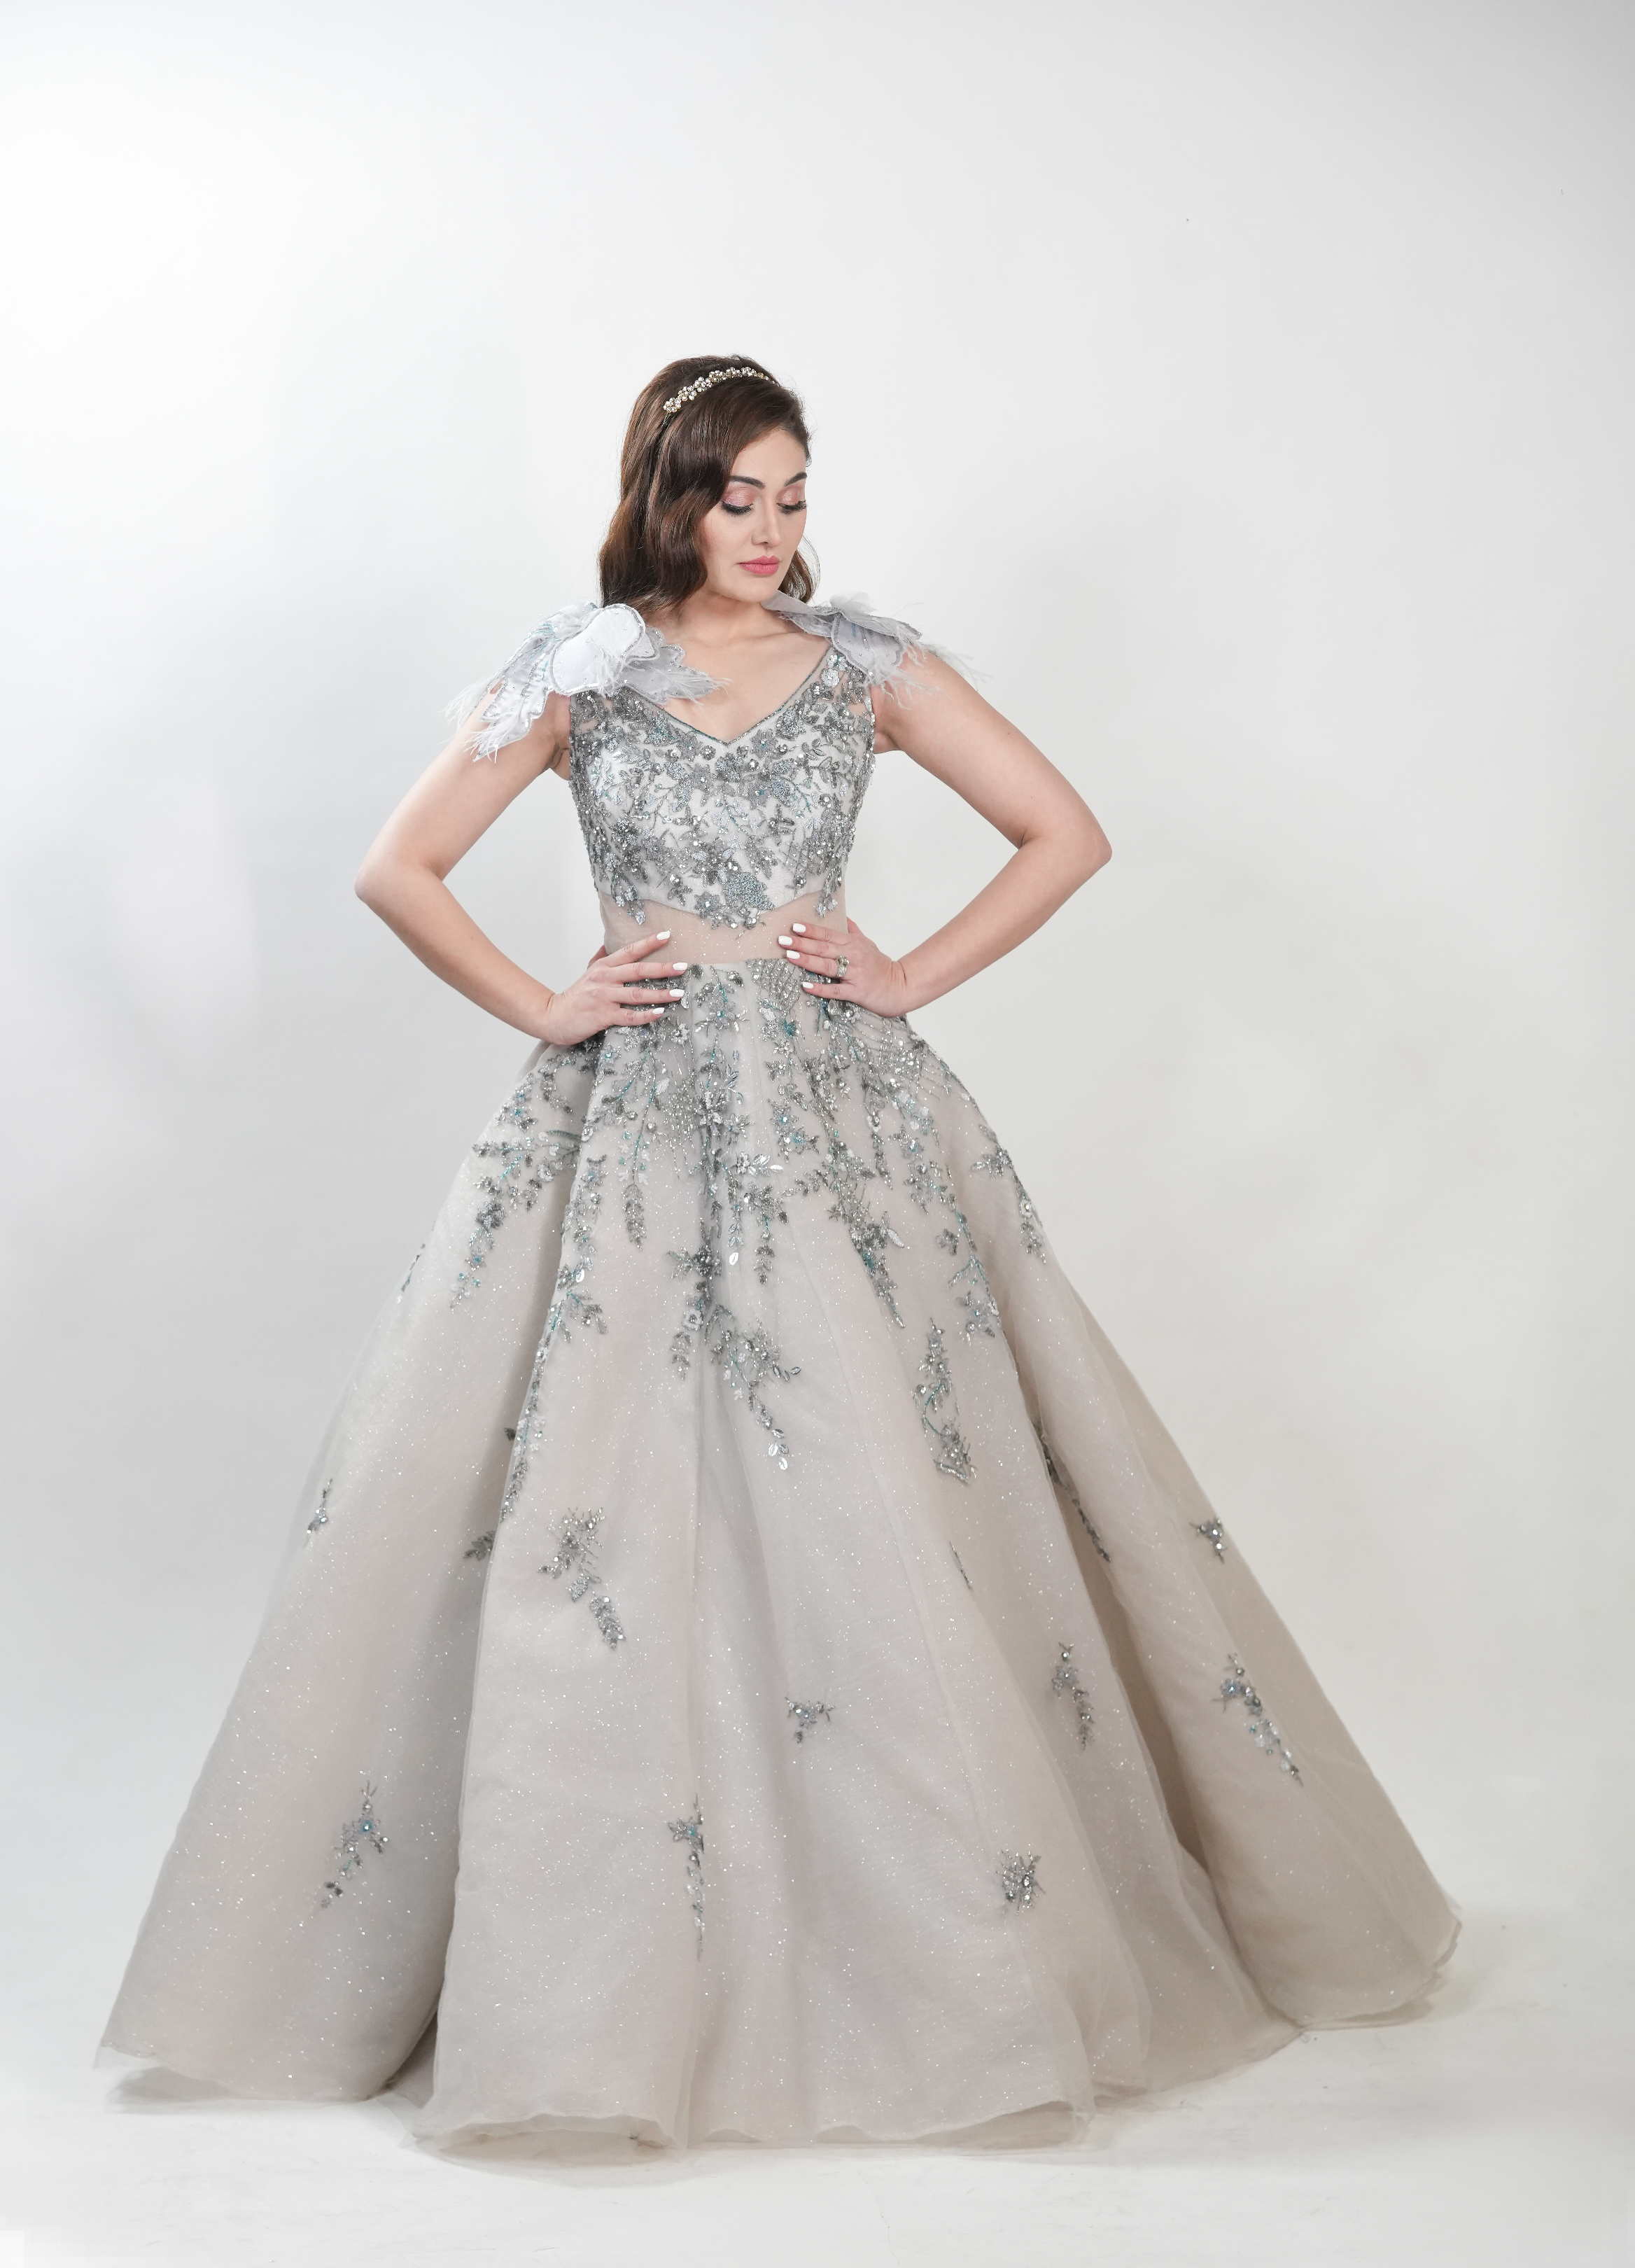 Exclusive Designer Wear Evening Gown - Shefali Jariwala's Choice